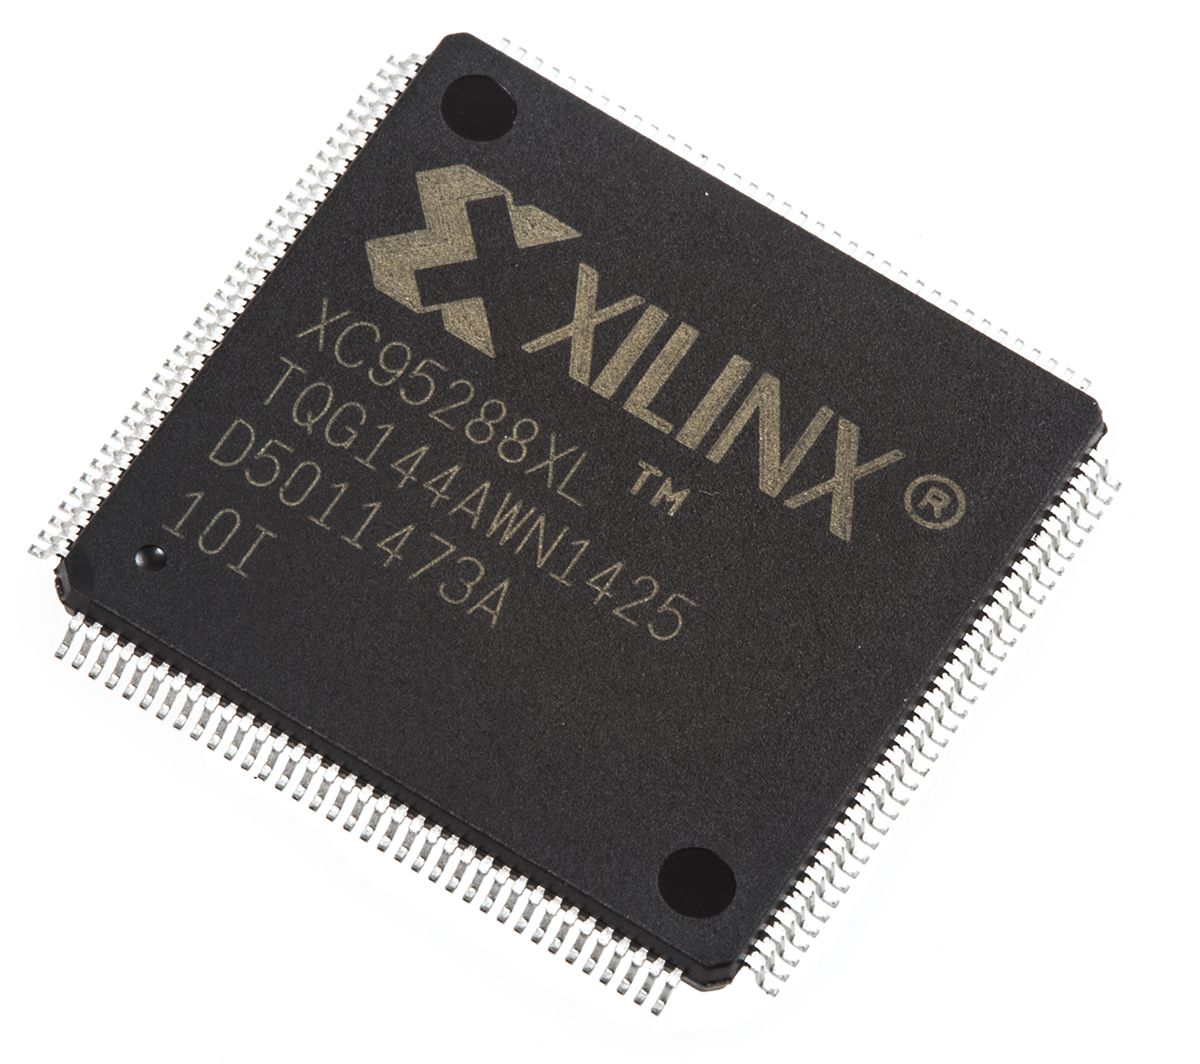 Xilinx XC95288XL-10TQG144I, CPLD XC9500XL Flash 288 Cells, 117 I/O, 16 Labs, ISP, 144-Pin TQFP